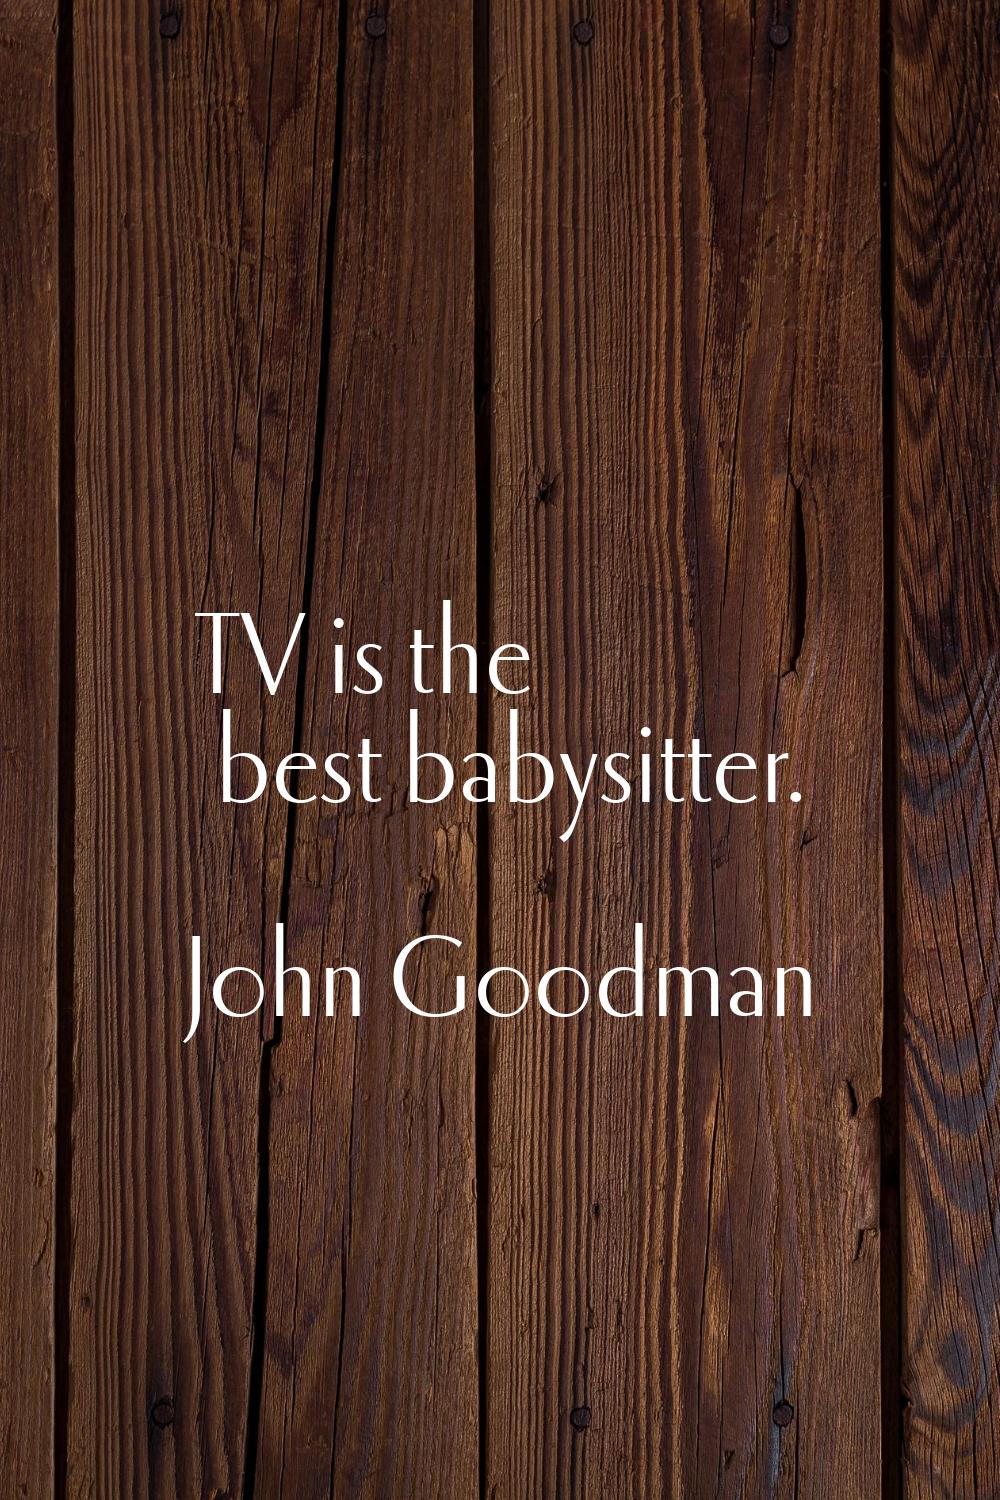 TV is the best babysitter.